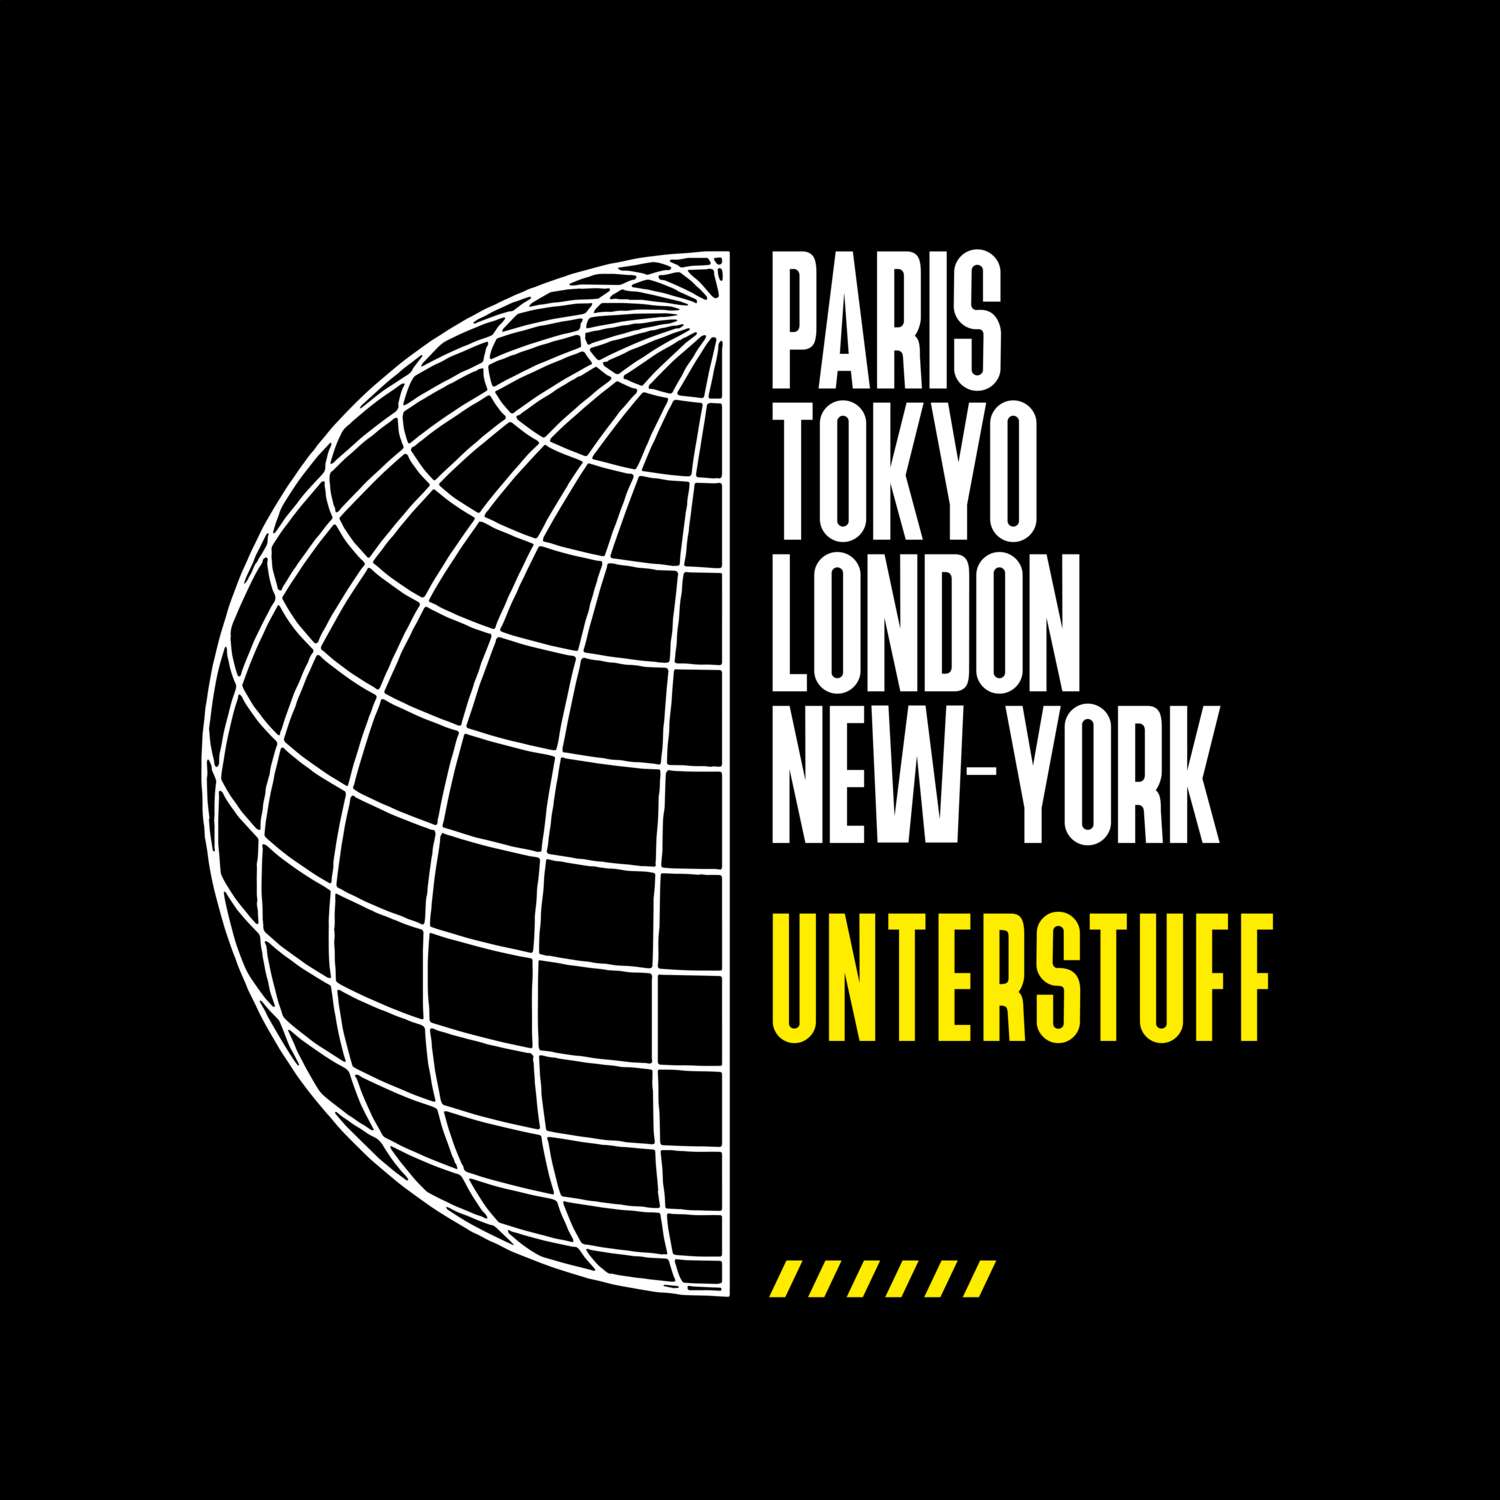 Unterstuff T-Shirt »Paris Tokyo London«